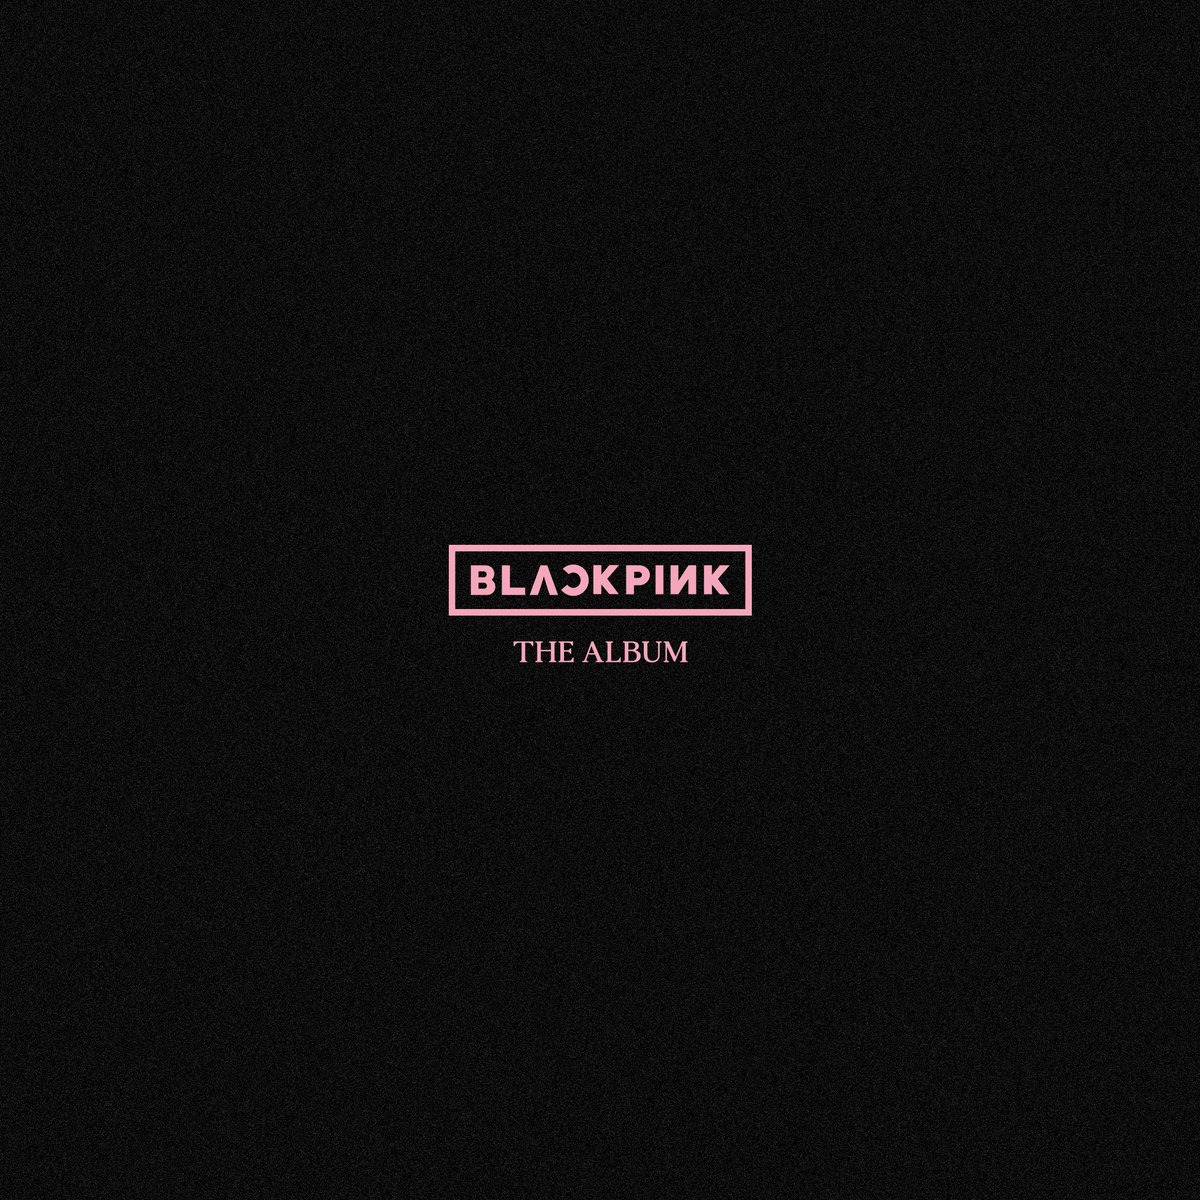 #BLACKPINK 1st VINYL LP [THE ALBUM] -LIMITED EDITION- 
Pre-order notice has been uploaded

▶️facebook.com/25056488532494…

#블랙핑크 #THEALBUM #1stVINYLLP #LIMITEDEDITION #20201006 #OfflineRelease #YG